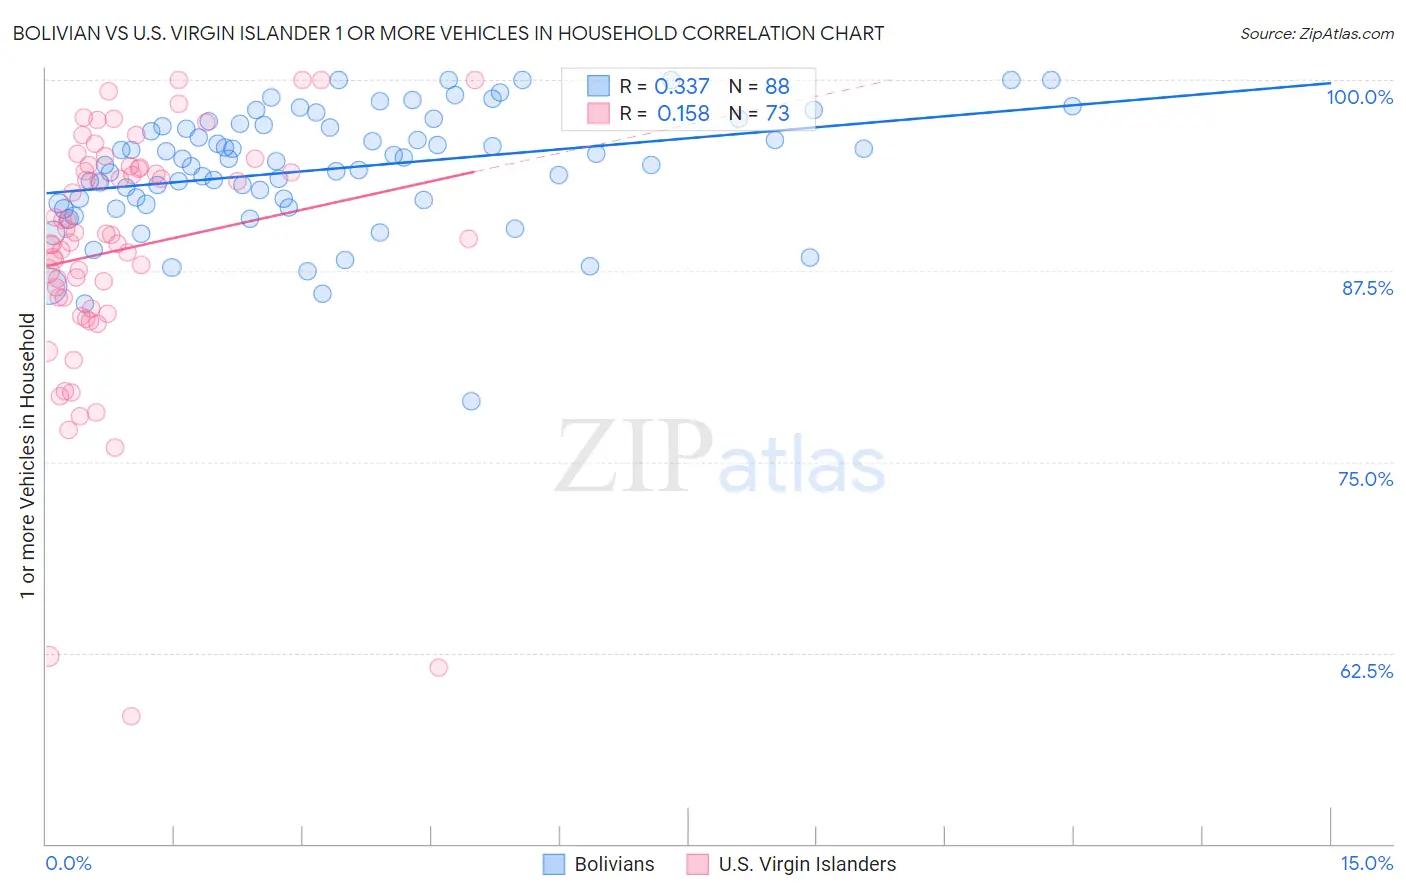 Bolivian vs U.S. Virgin Islander 1 or more Vehicles in Household